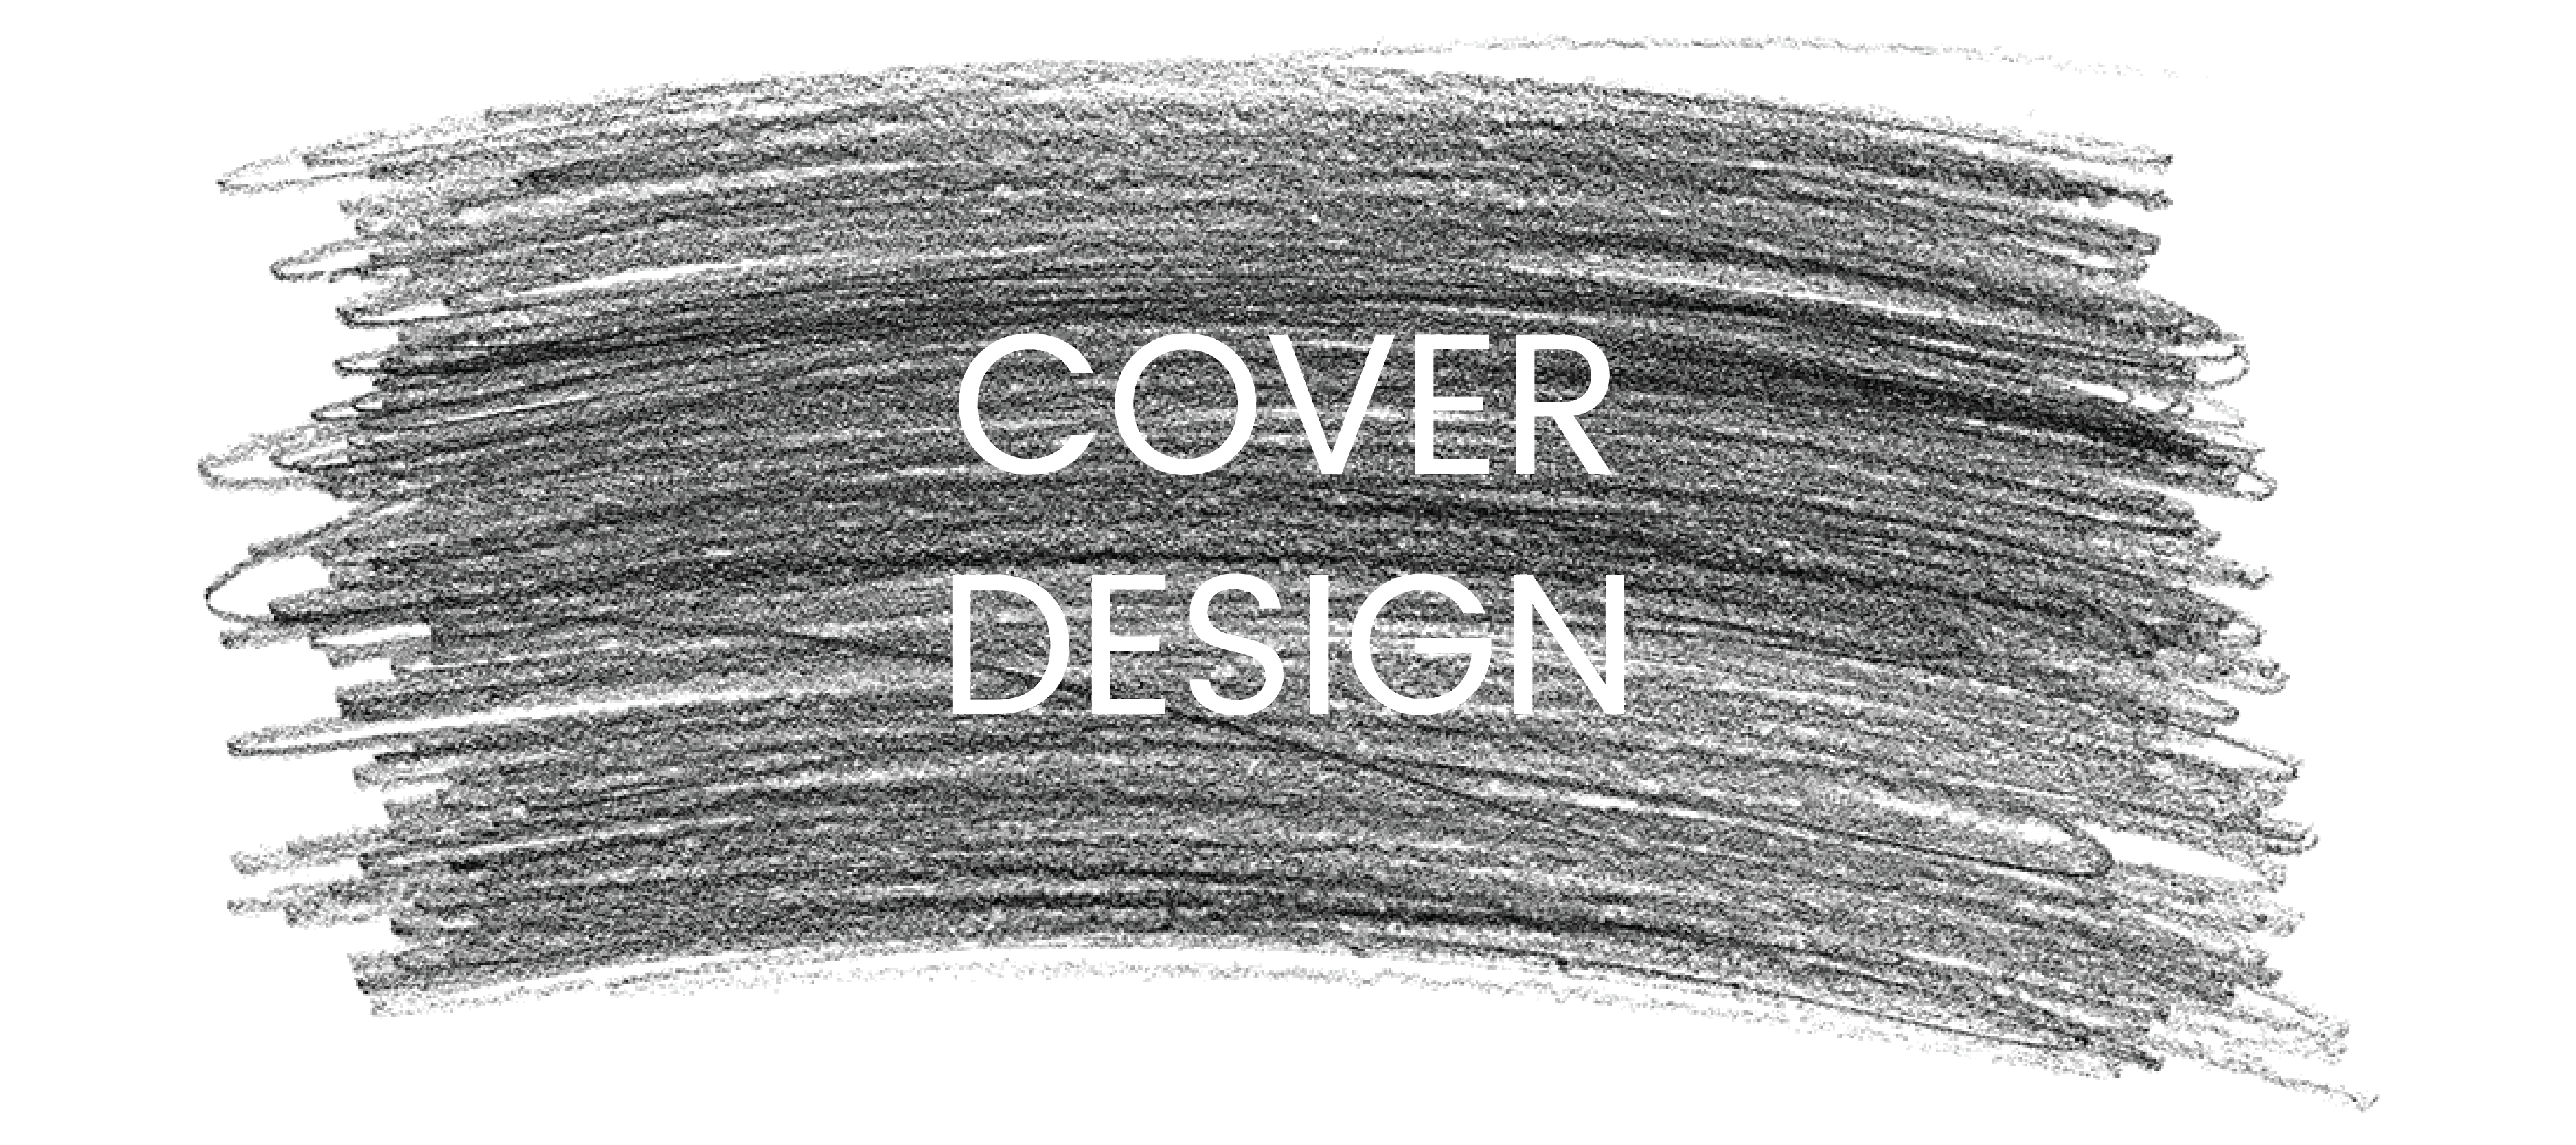 Services_pub-cover-design